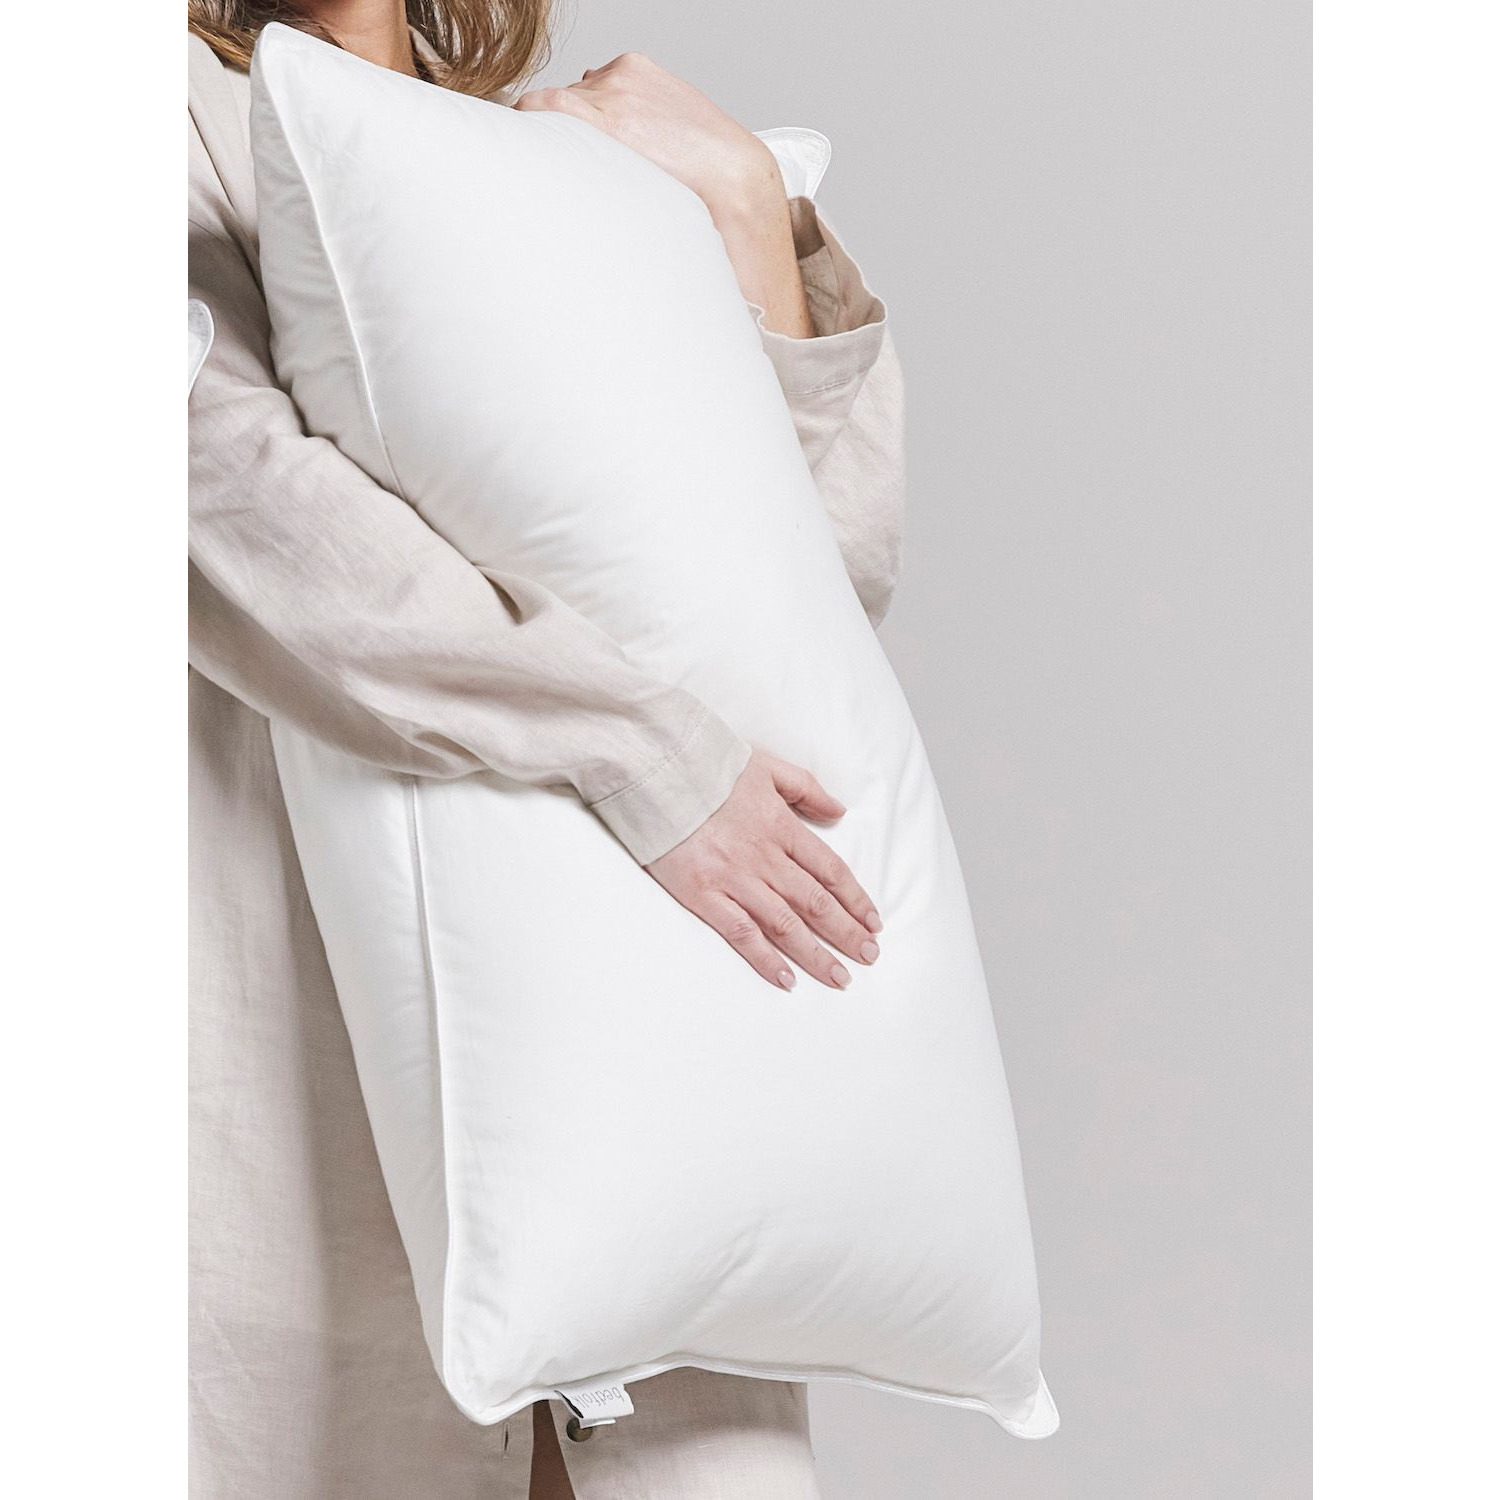 Bedfolk Down Alternative Kingsize Pillow, Medium/Firm - image 1